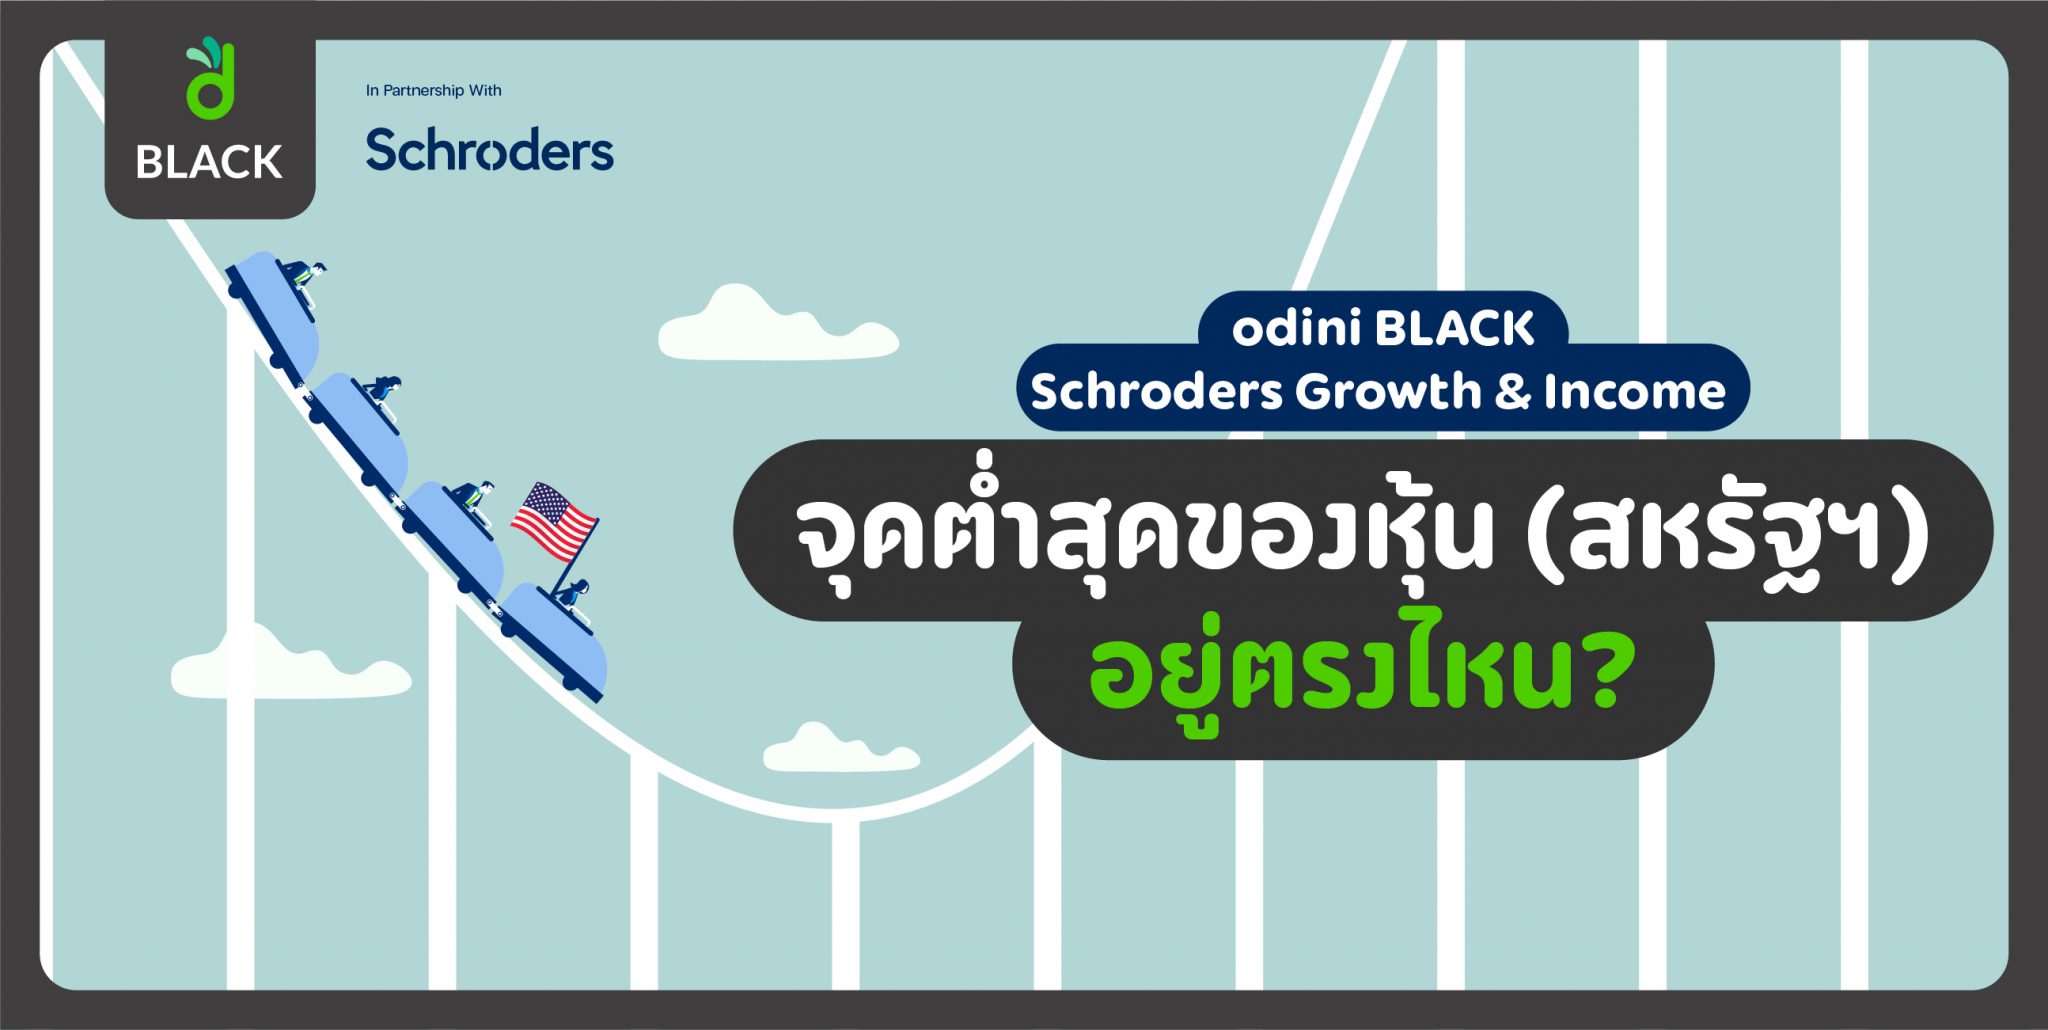 odini BLACK Schroders Growth & Income 🎢 จุดต่ำสุดของหุ้น (สหรัฐฯ) อยู่ตรงไหน?